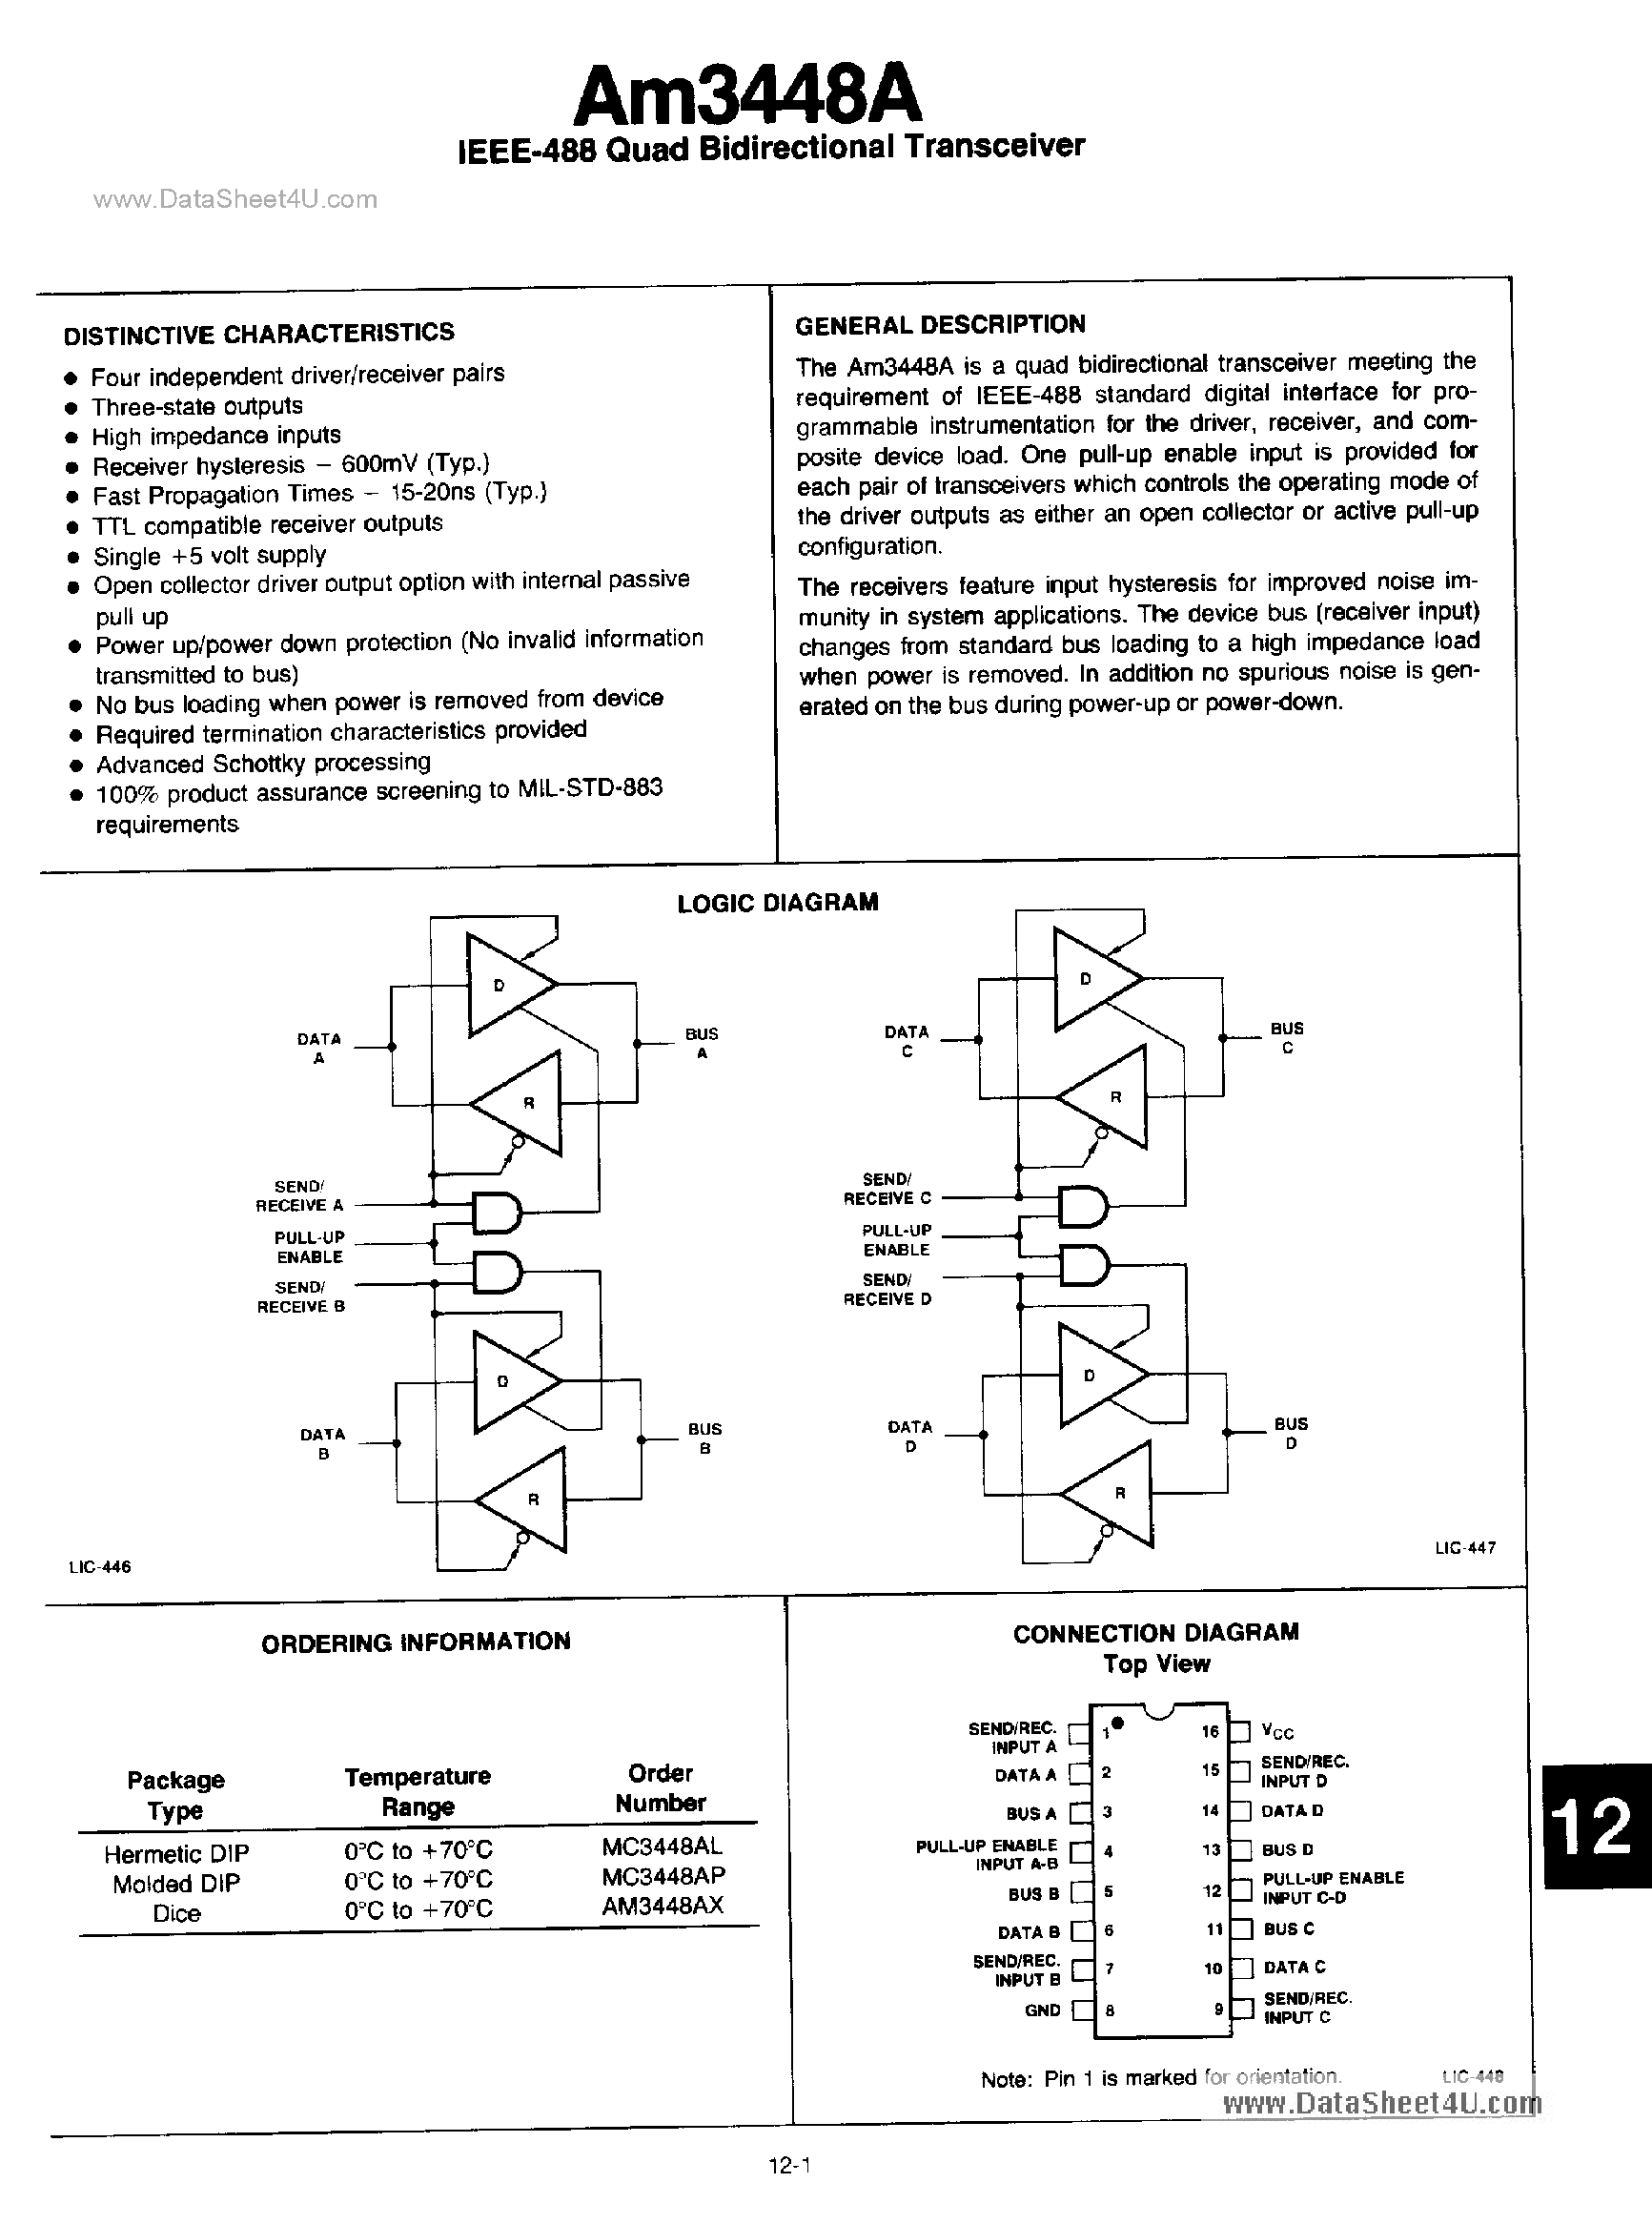 Даташит AM3448A - IEEE-488 QUAD BIDIRECTIONAL TRANSCEIVER страница 1